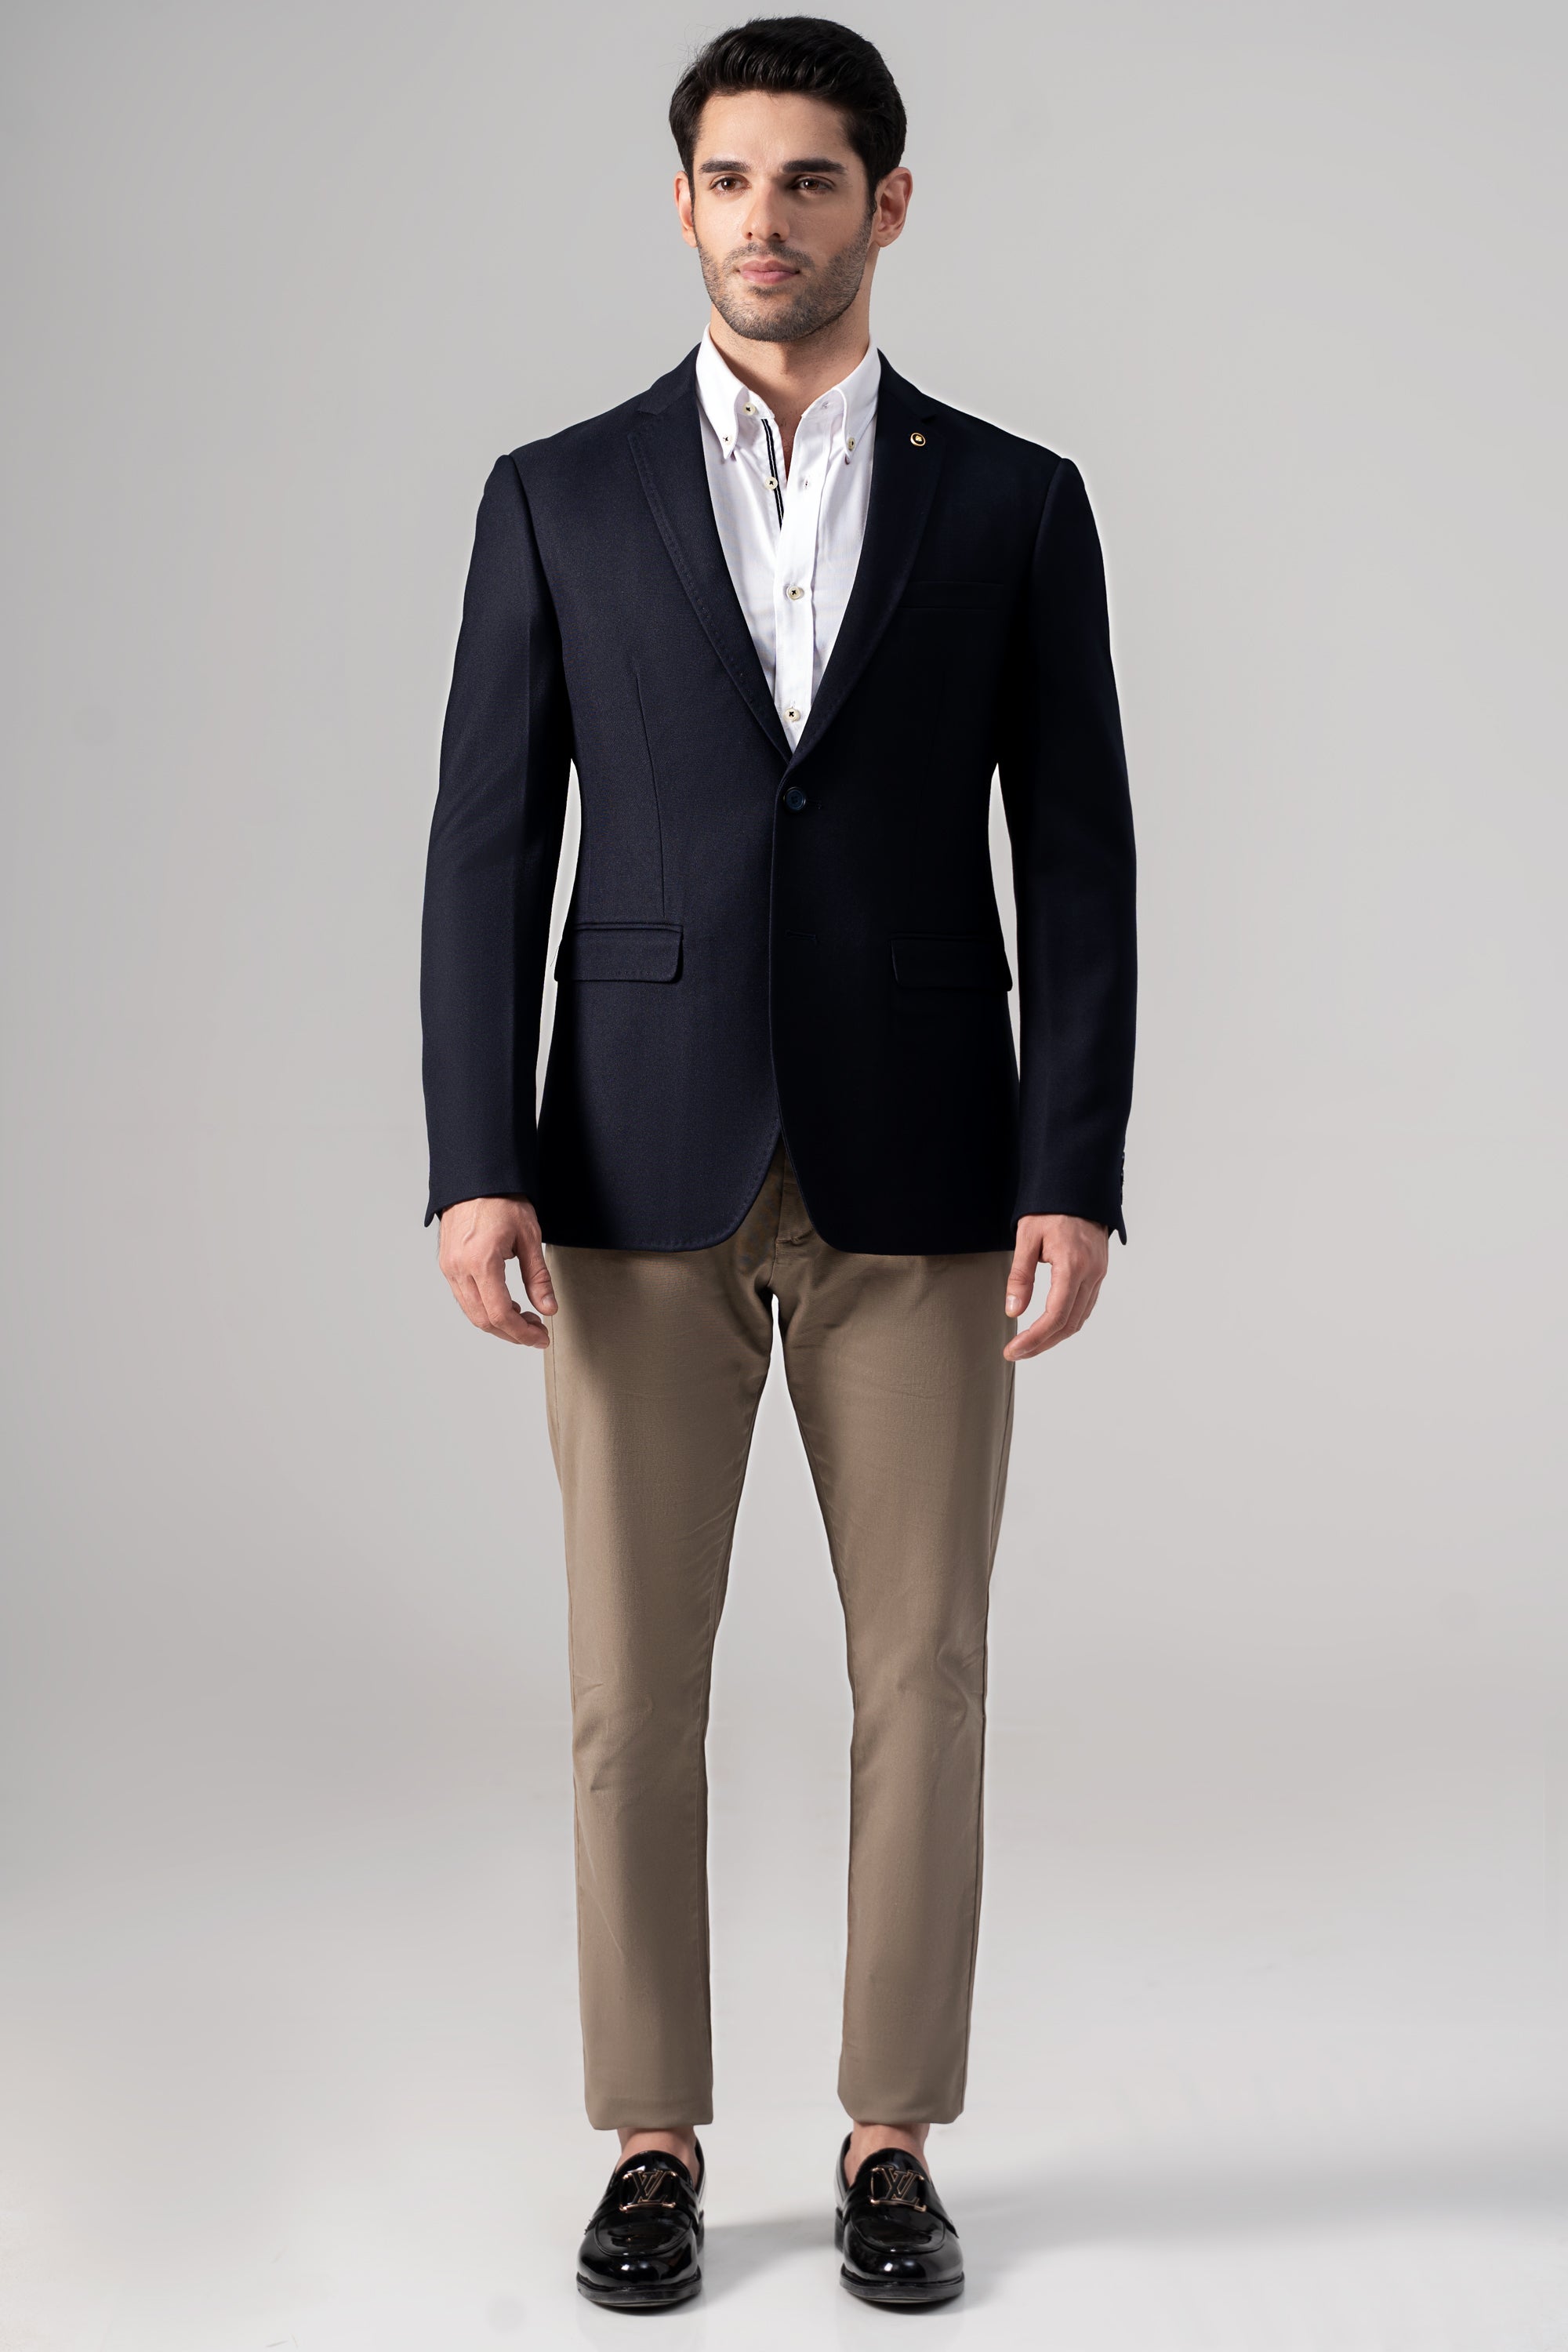 Top 10 grey pant matching shirt || grey pant combination shirt || Matching  shirts| the stylish guru - YouTube